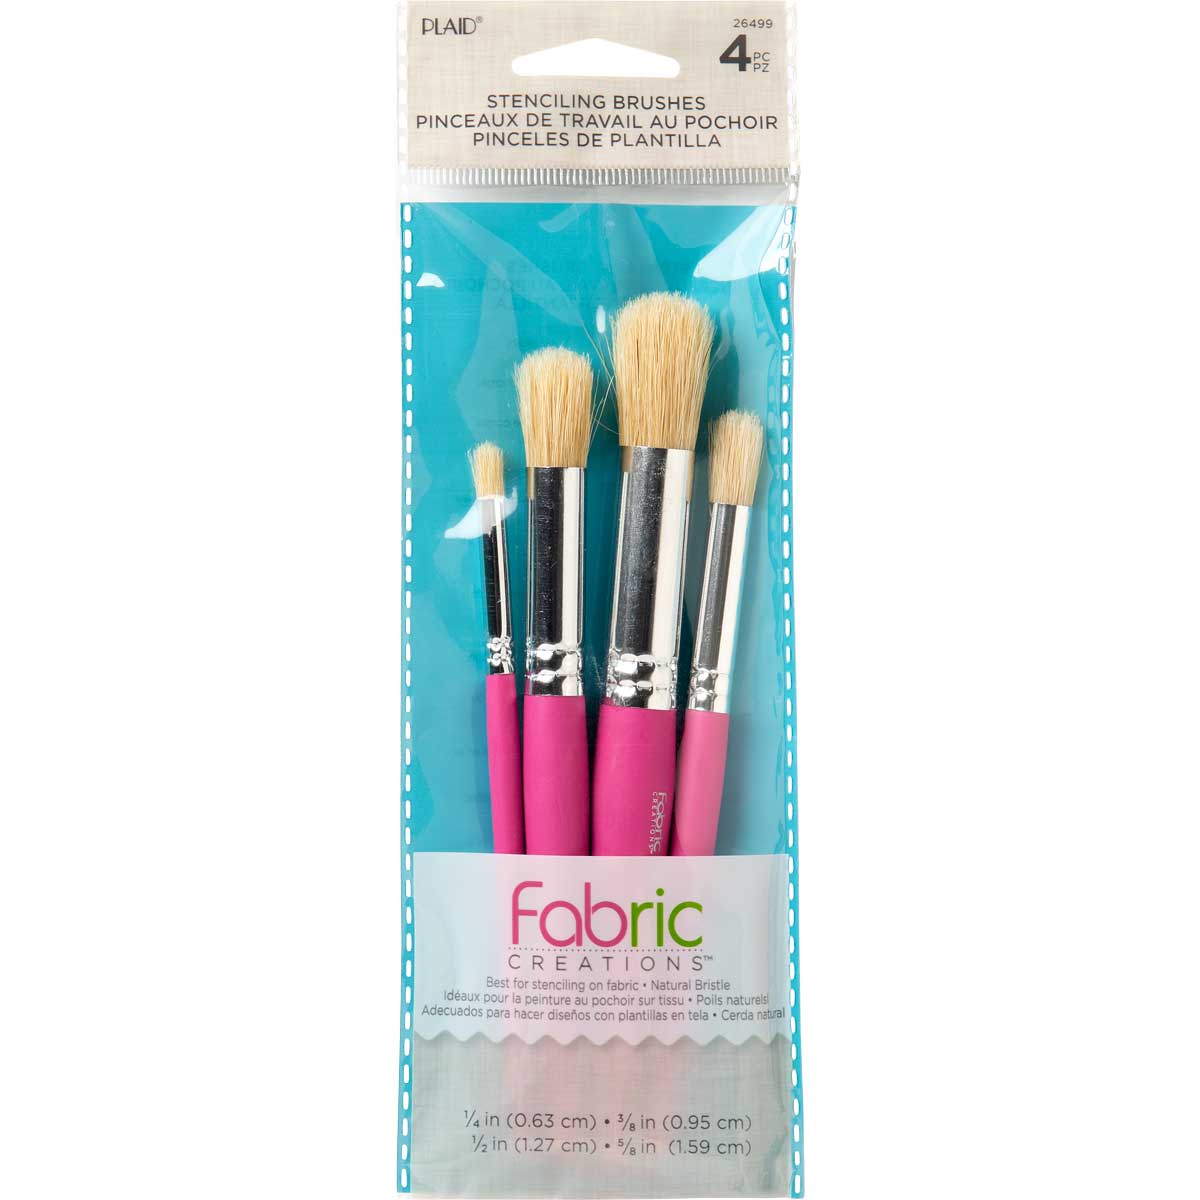 Fabric Creations™ Brush Set - Fabric Stencil Set - 26499